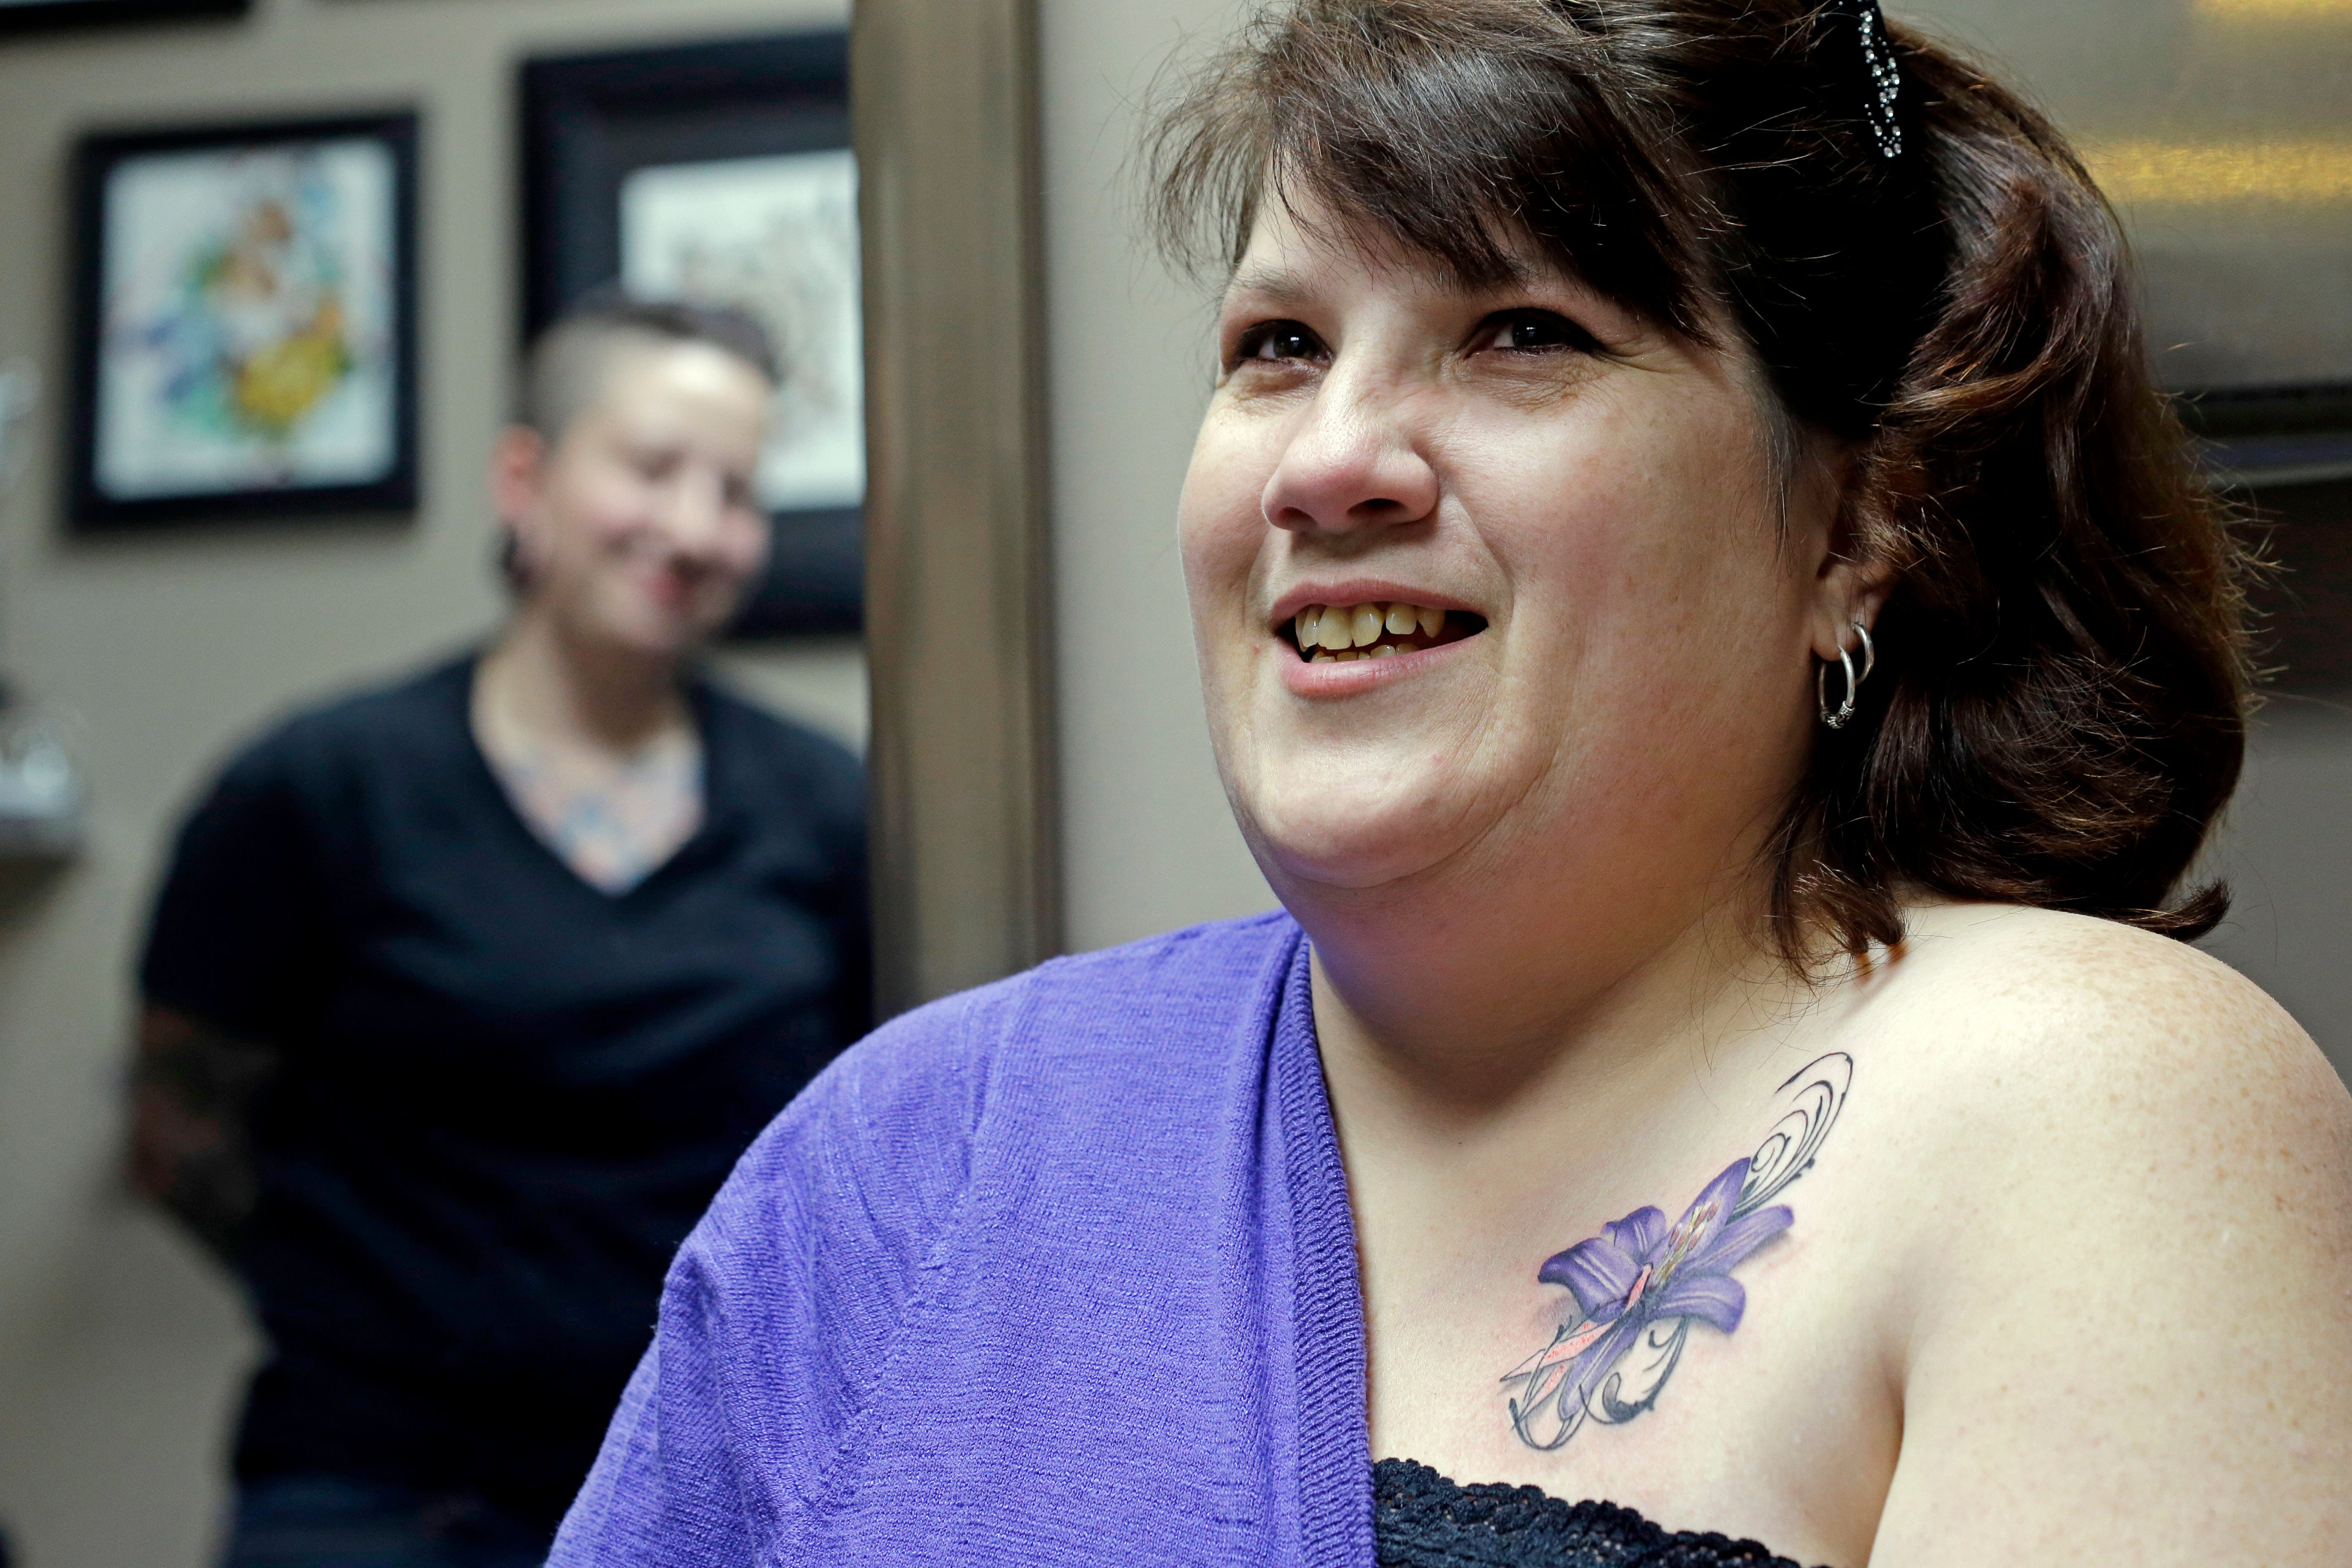 Colorado group helps breast cancer survivors get tattoos | Fox News